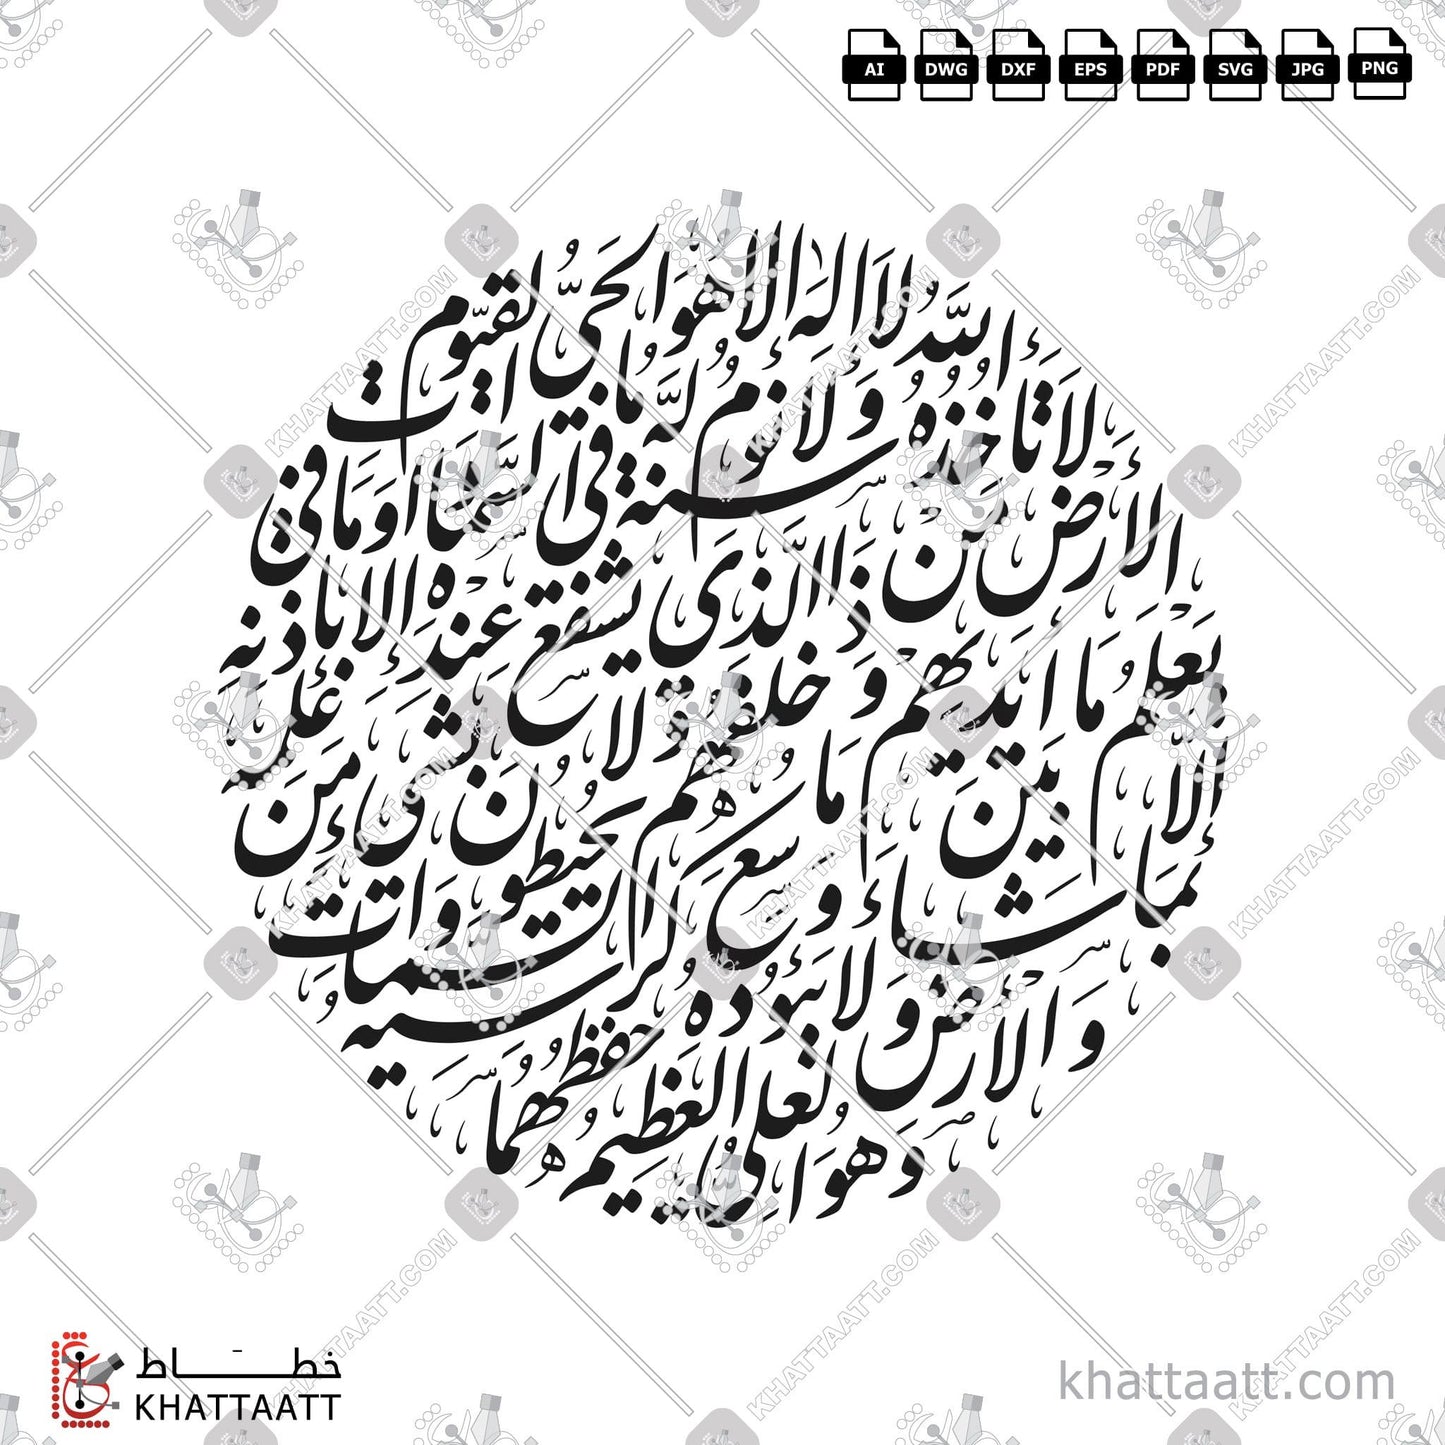 Download Arabic Calligraphy of Ayatul Kursi - آية الكرسي in Farsi - الخط الفارسي in vector and .png